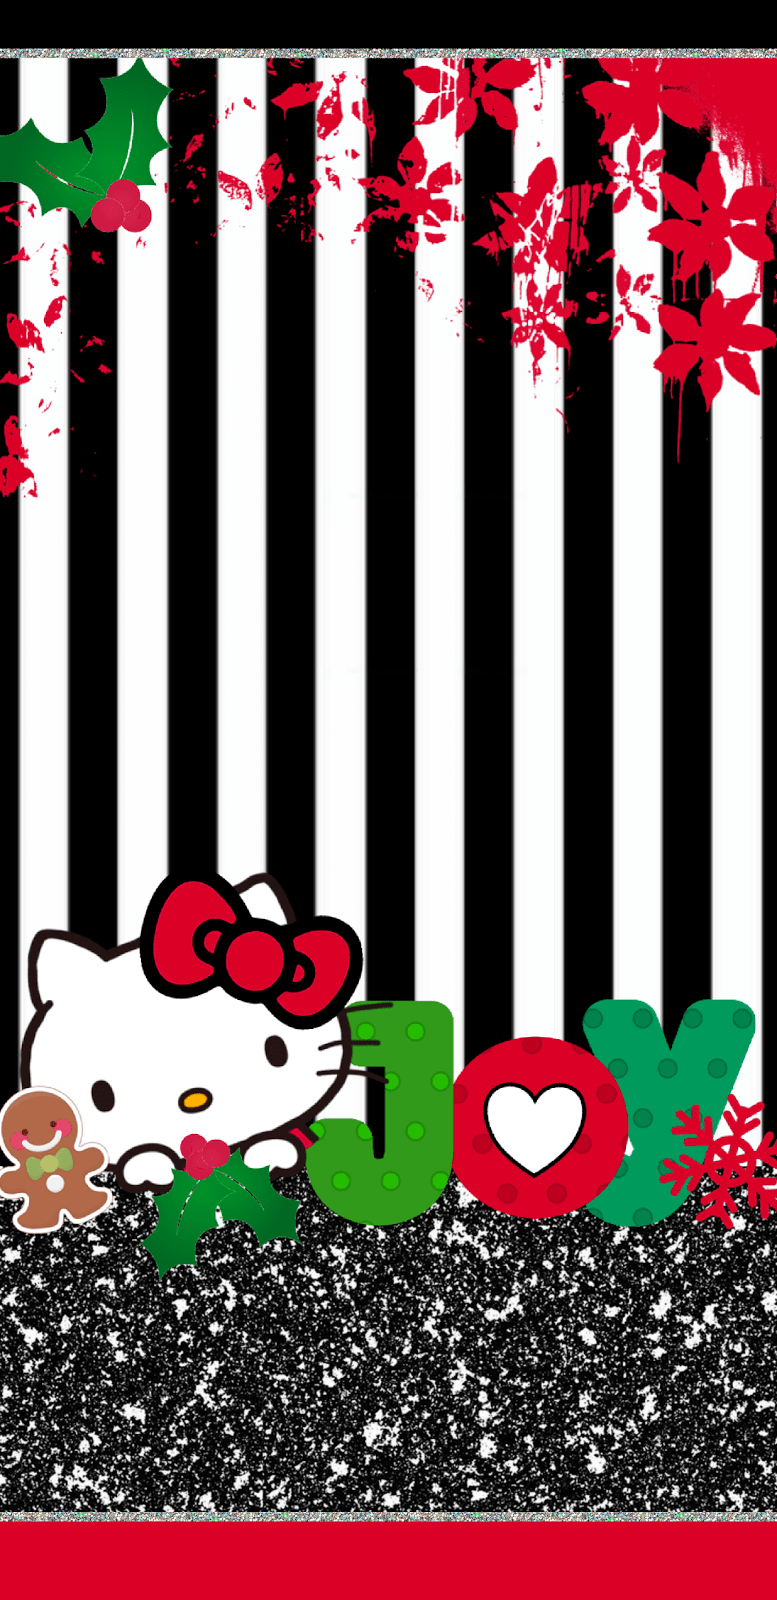 Hello Kitty Christmas Wallpaper 1